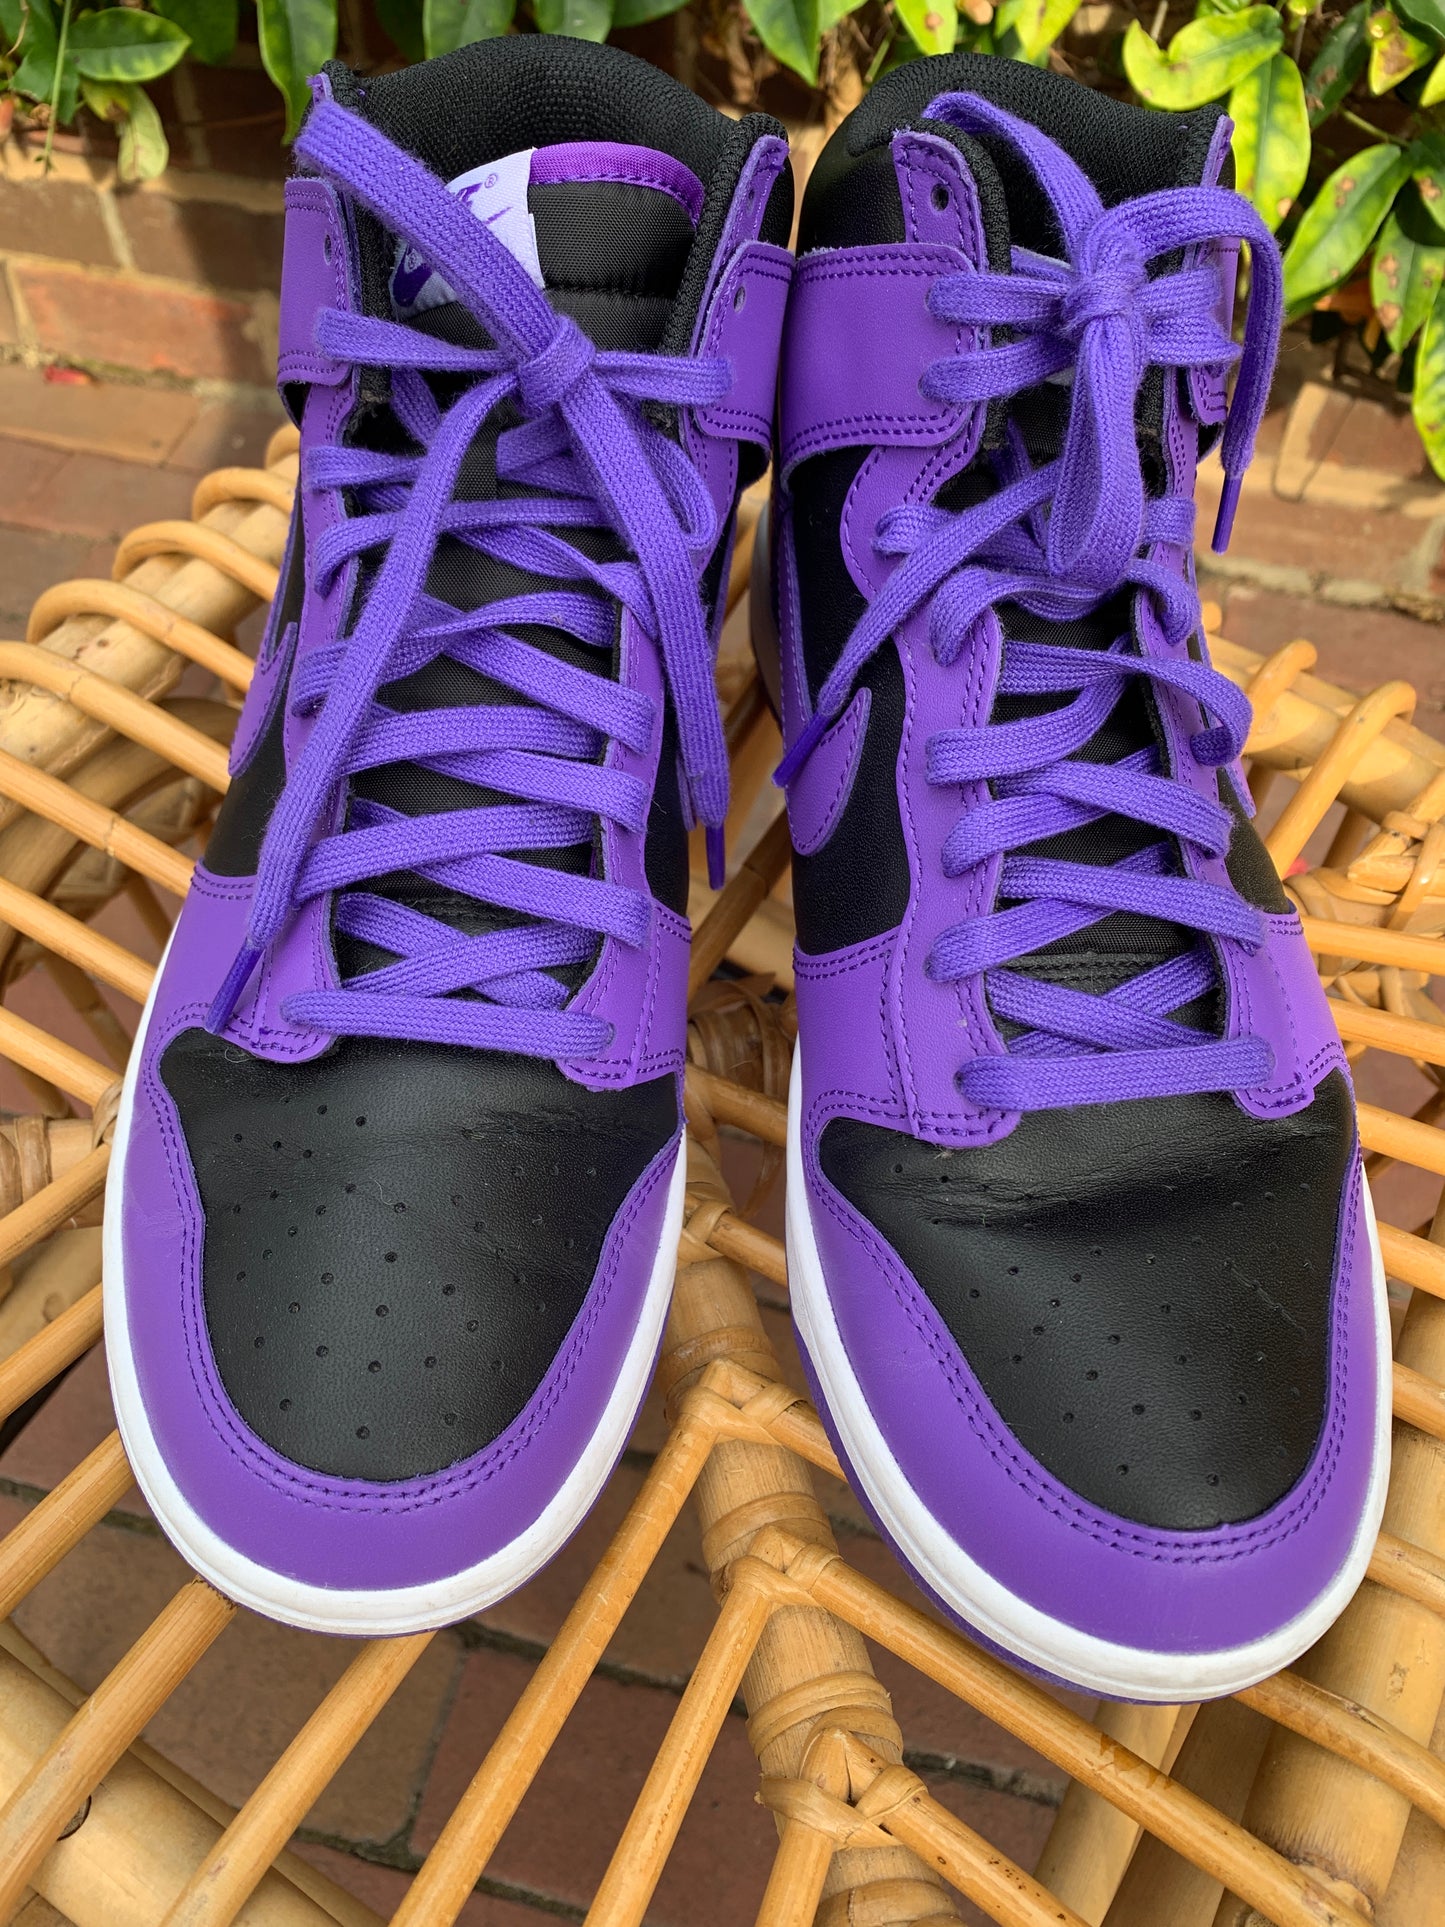 Women's Nike Dunk High Retro Purple, Black Sneakers Sz. 9